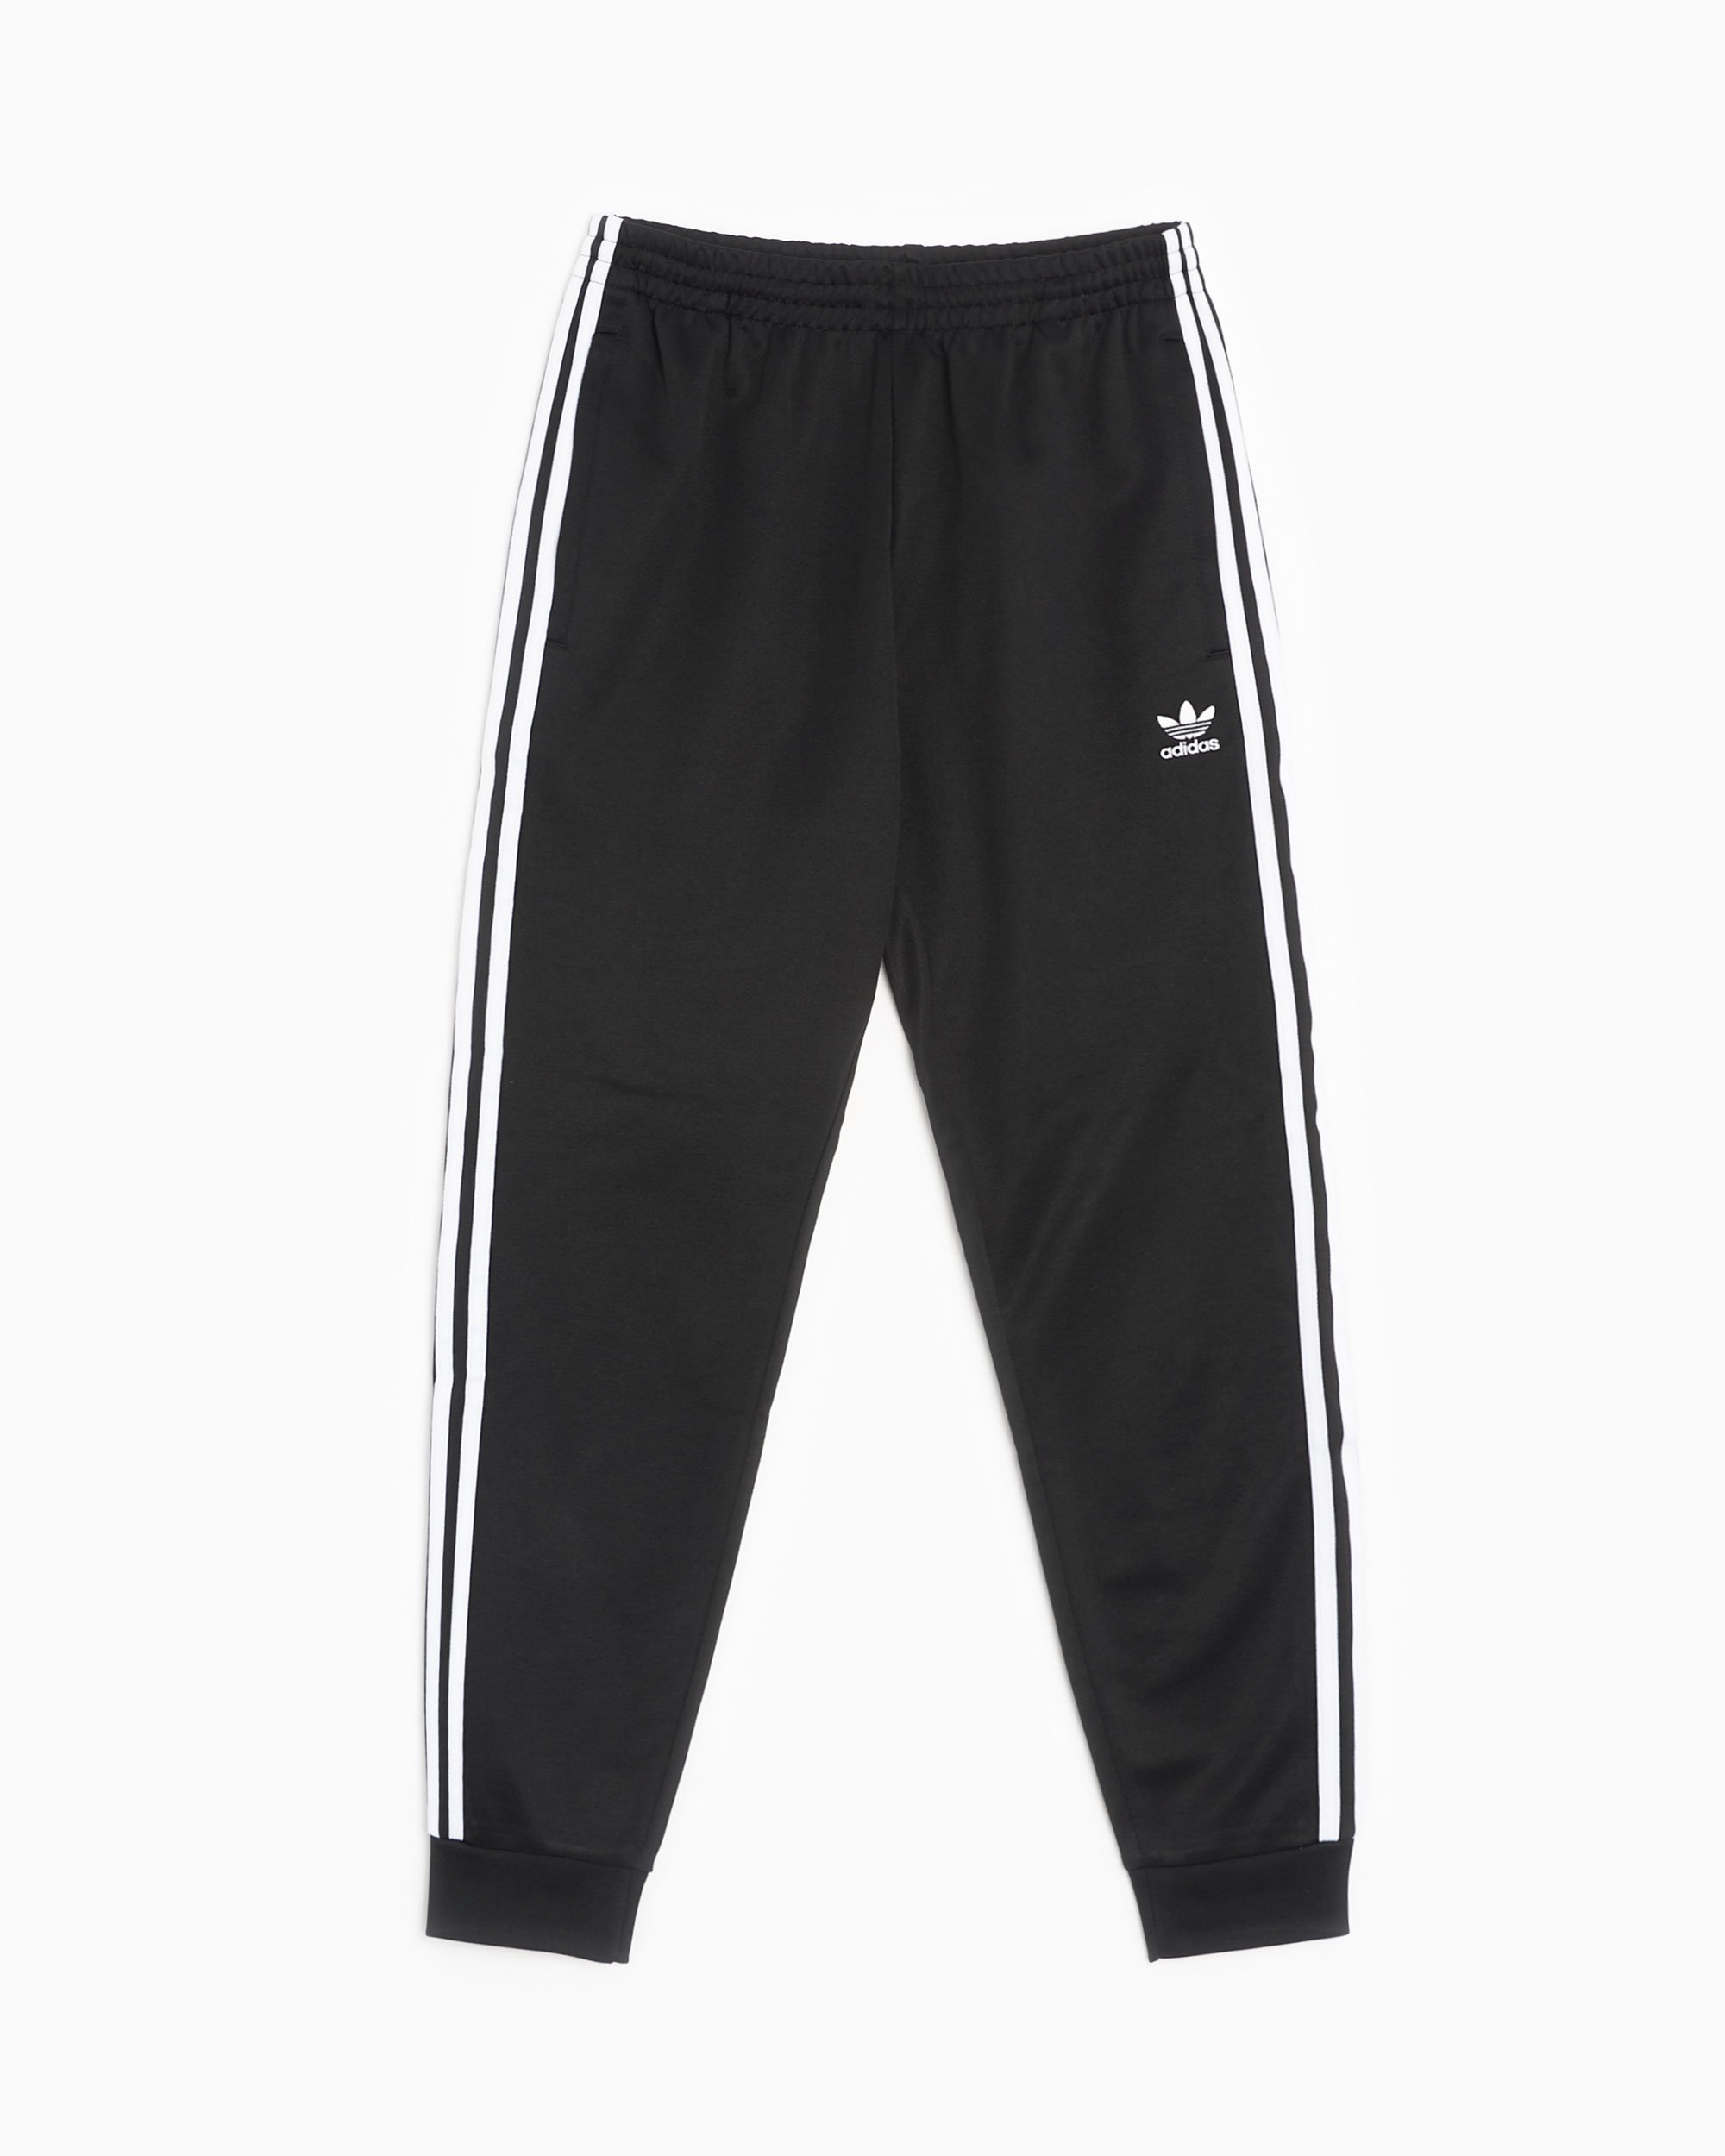 adidas Originals SST Men's Track Pants Black IL2488| Buy Online at ...